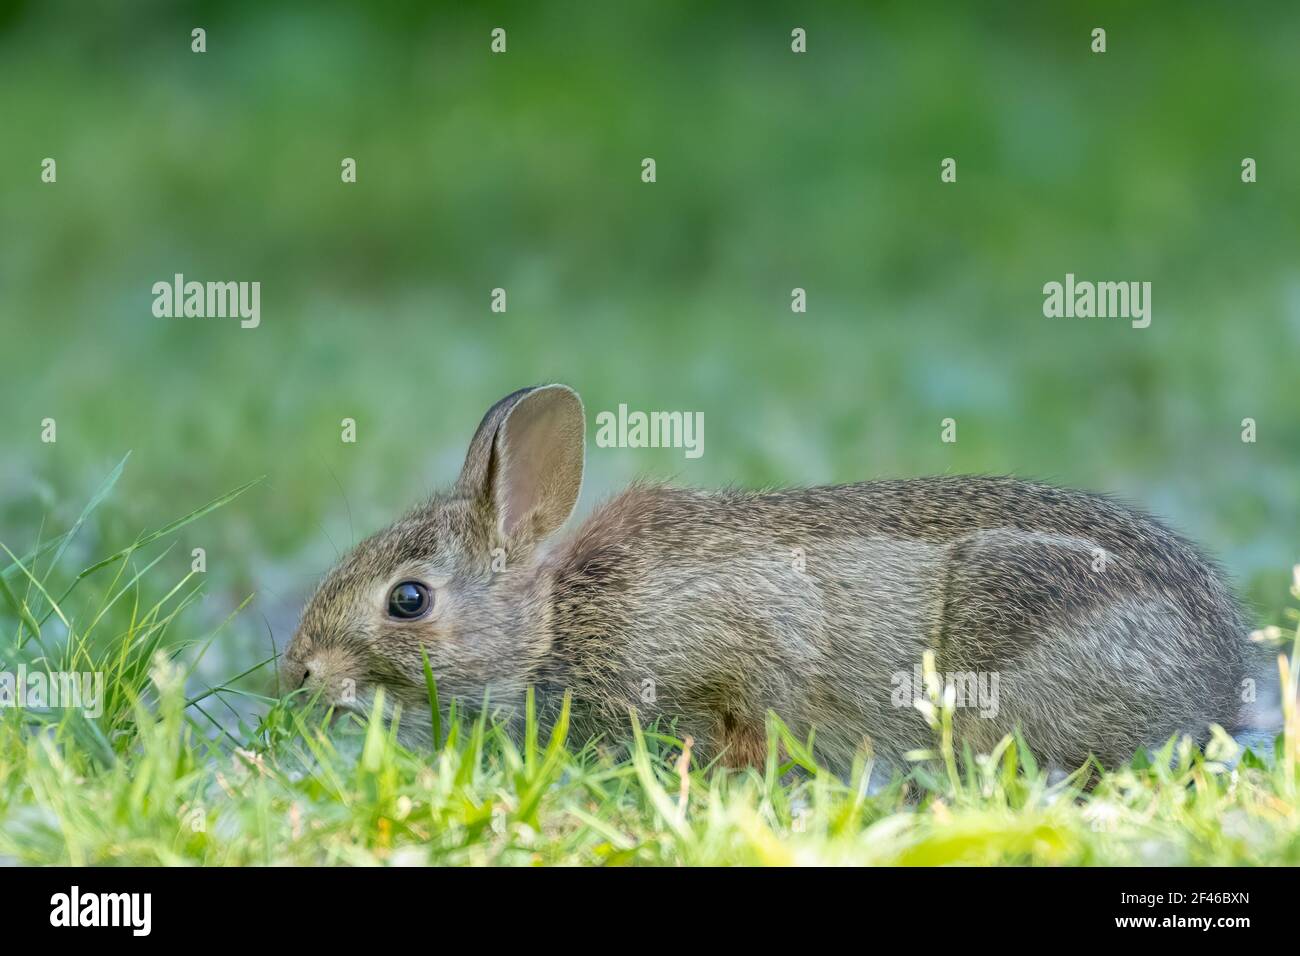 Baby bunny - rabbit kitten eating in a field Stock Photo